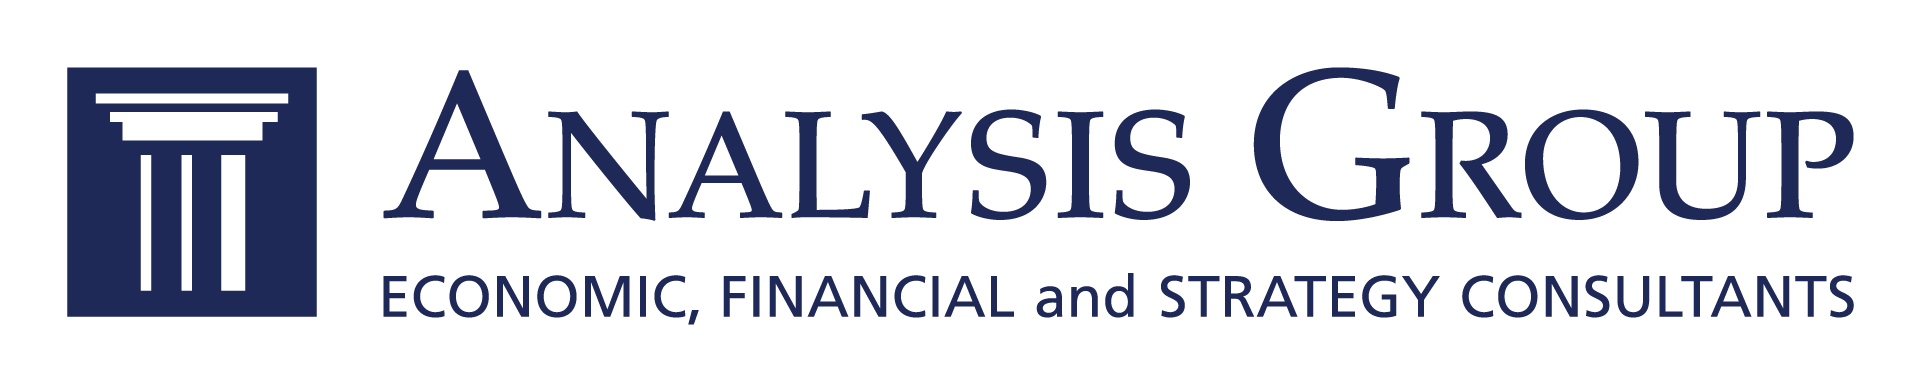 Analysis Group, Inc. logo